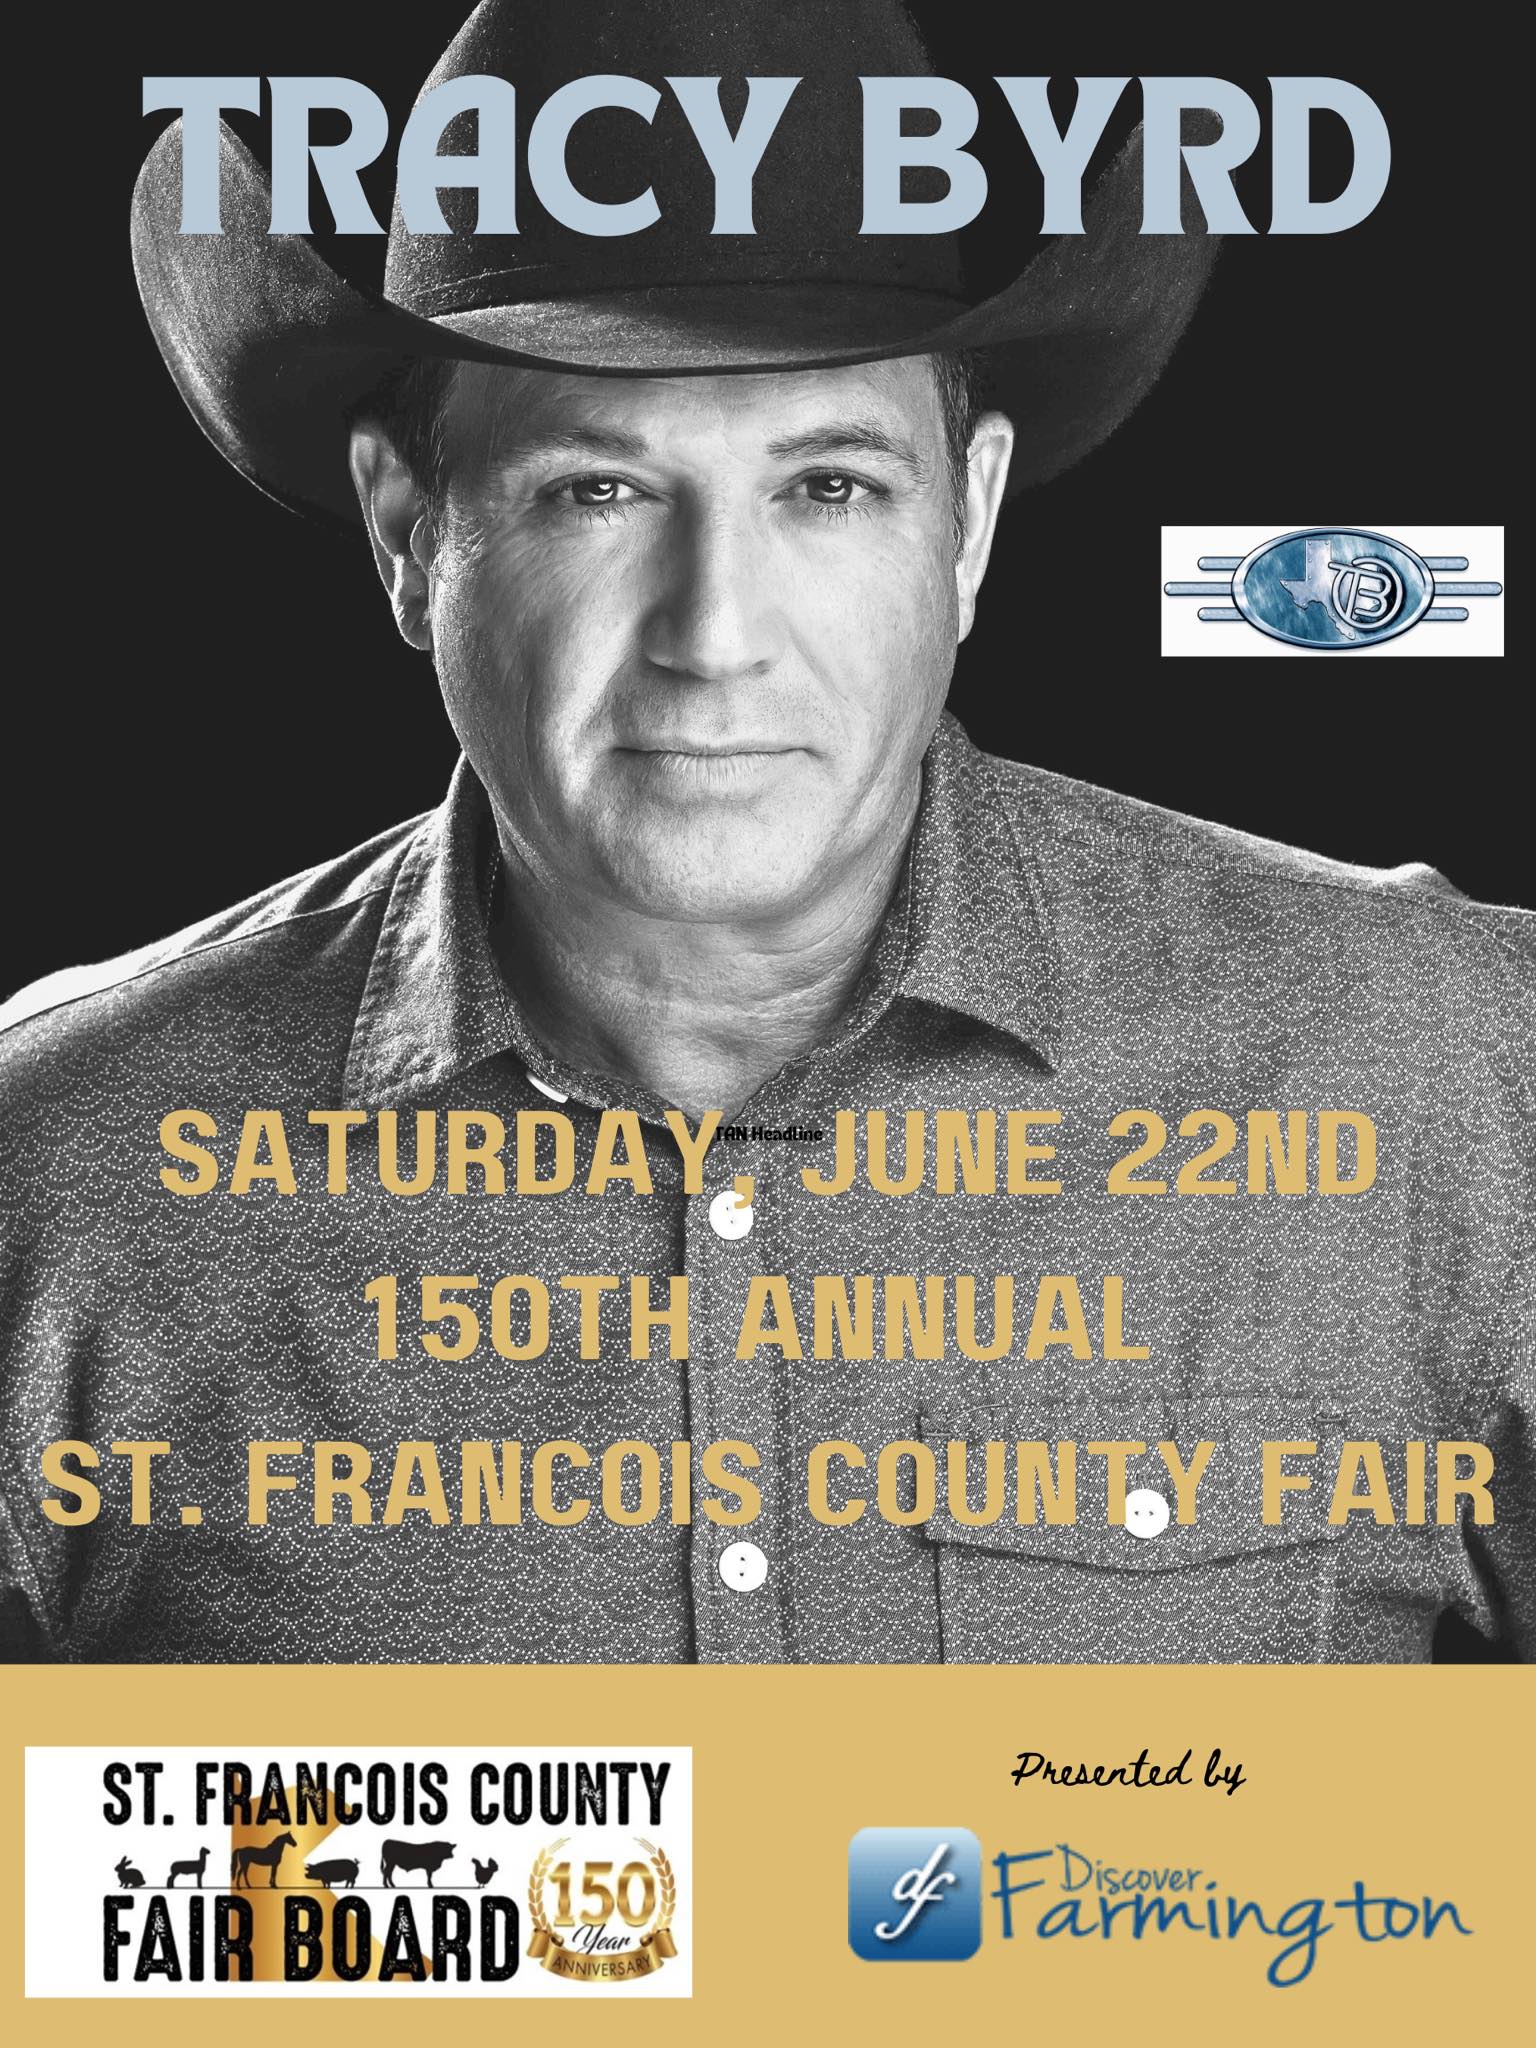 St. Francois County Fair Featuring Tracy Byrd